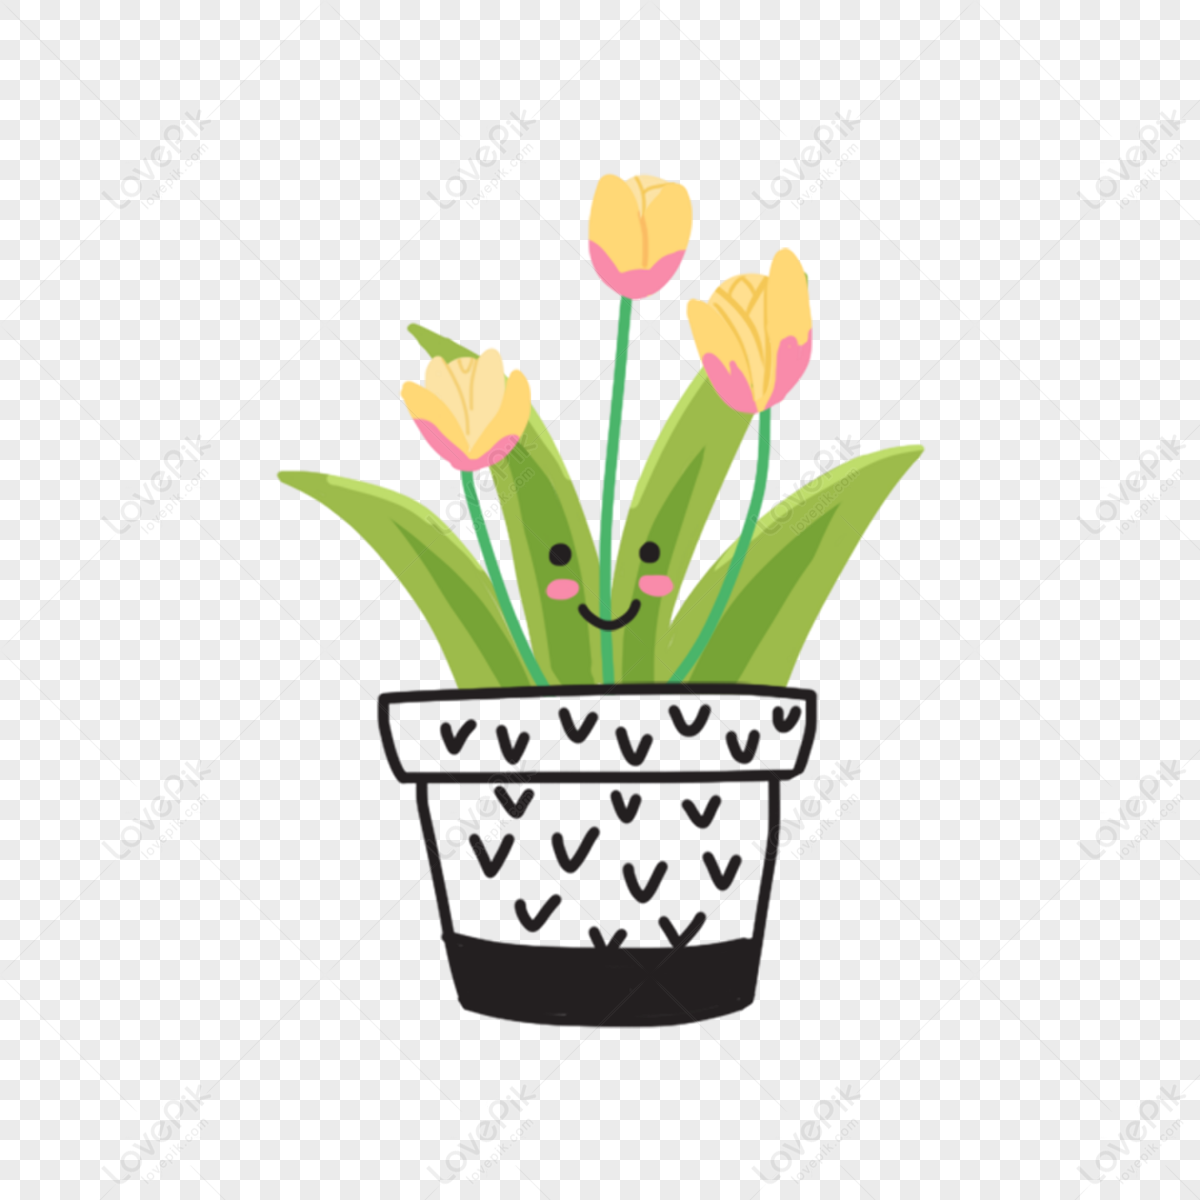 Flower Growth Set Floral Pot Plant Bloom Stages Stock Illustration -  Download Image Now - Flower Pot, Growth, Illustration - iStock